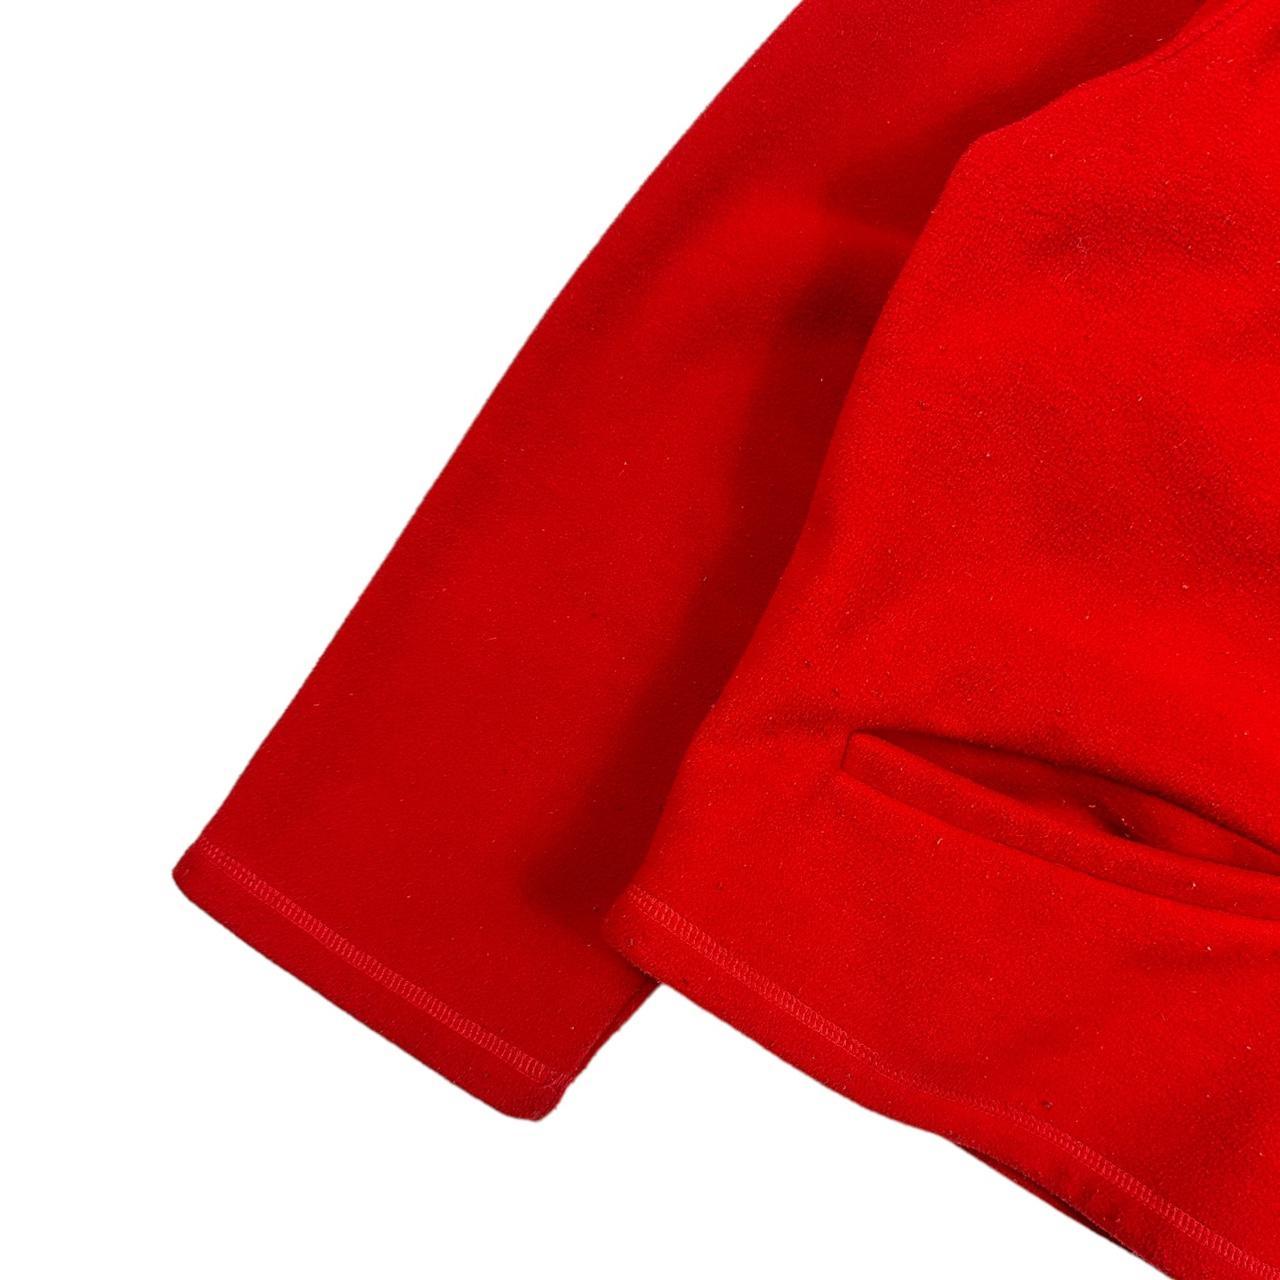 Vintage 1990s Armani Jeans Red Fleece Top